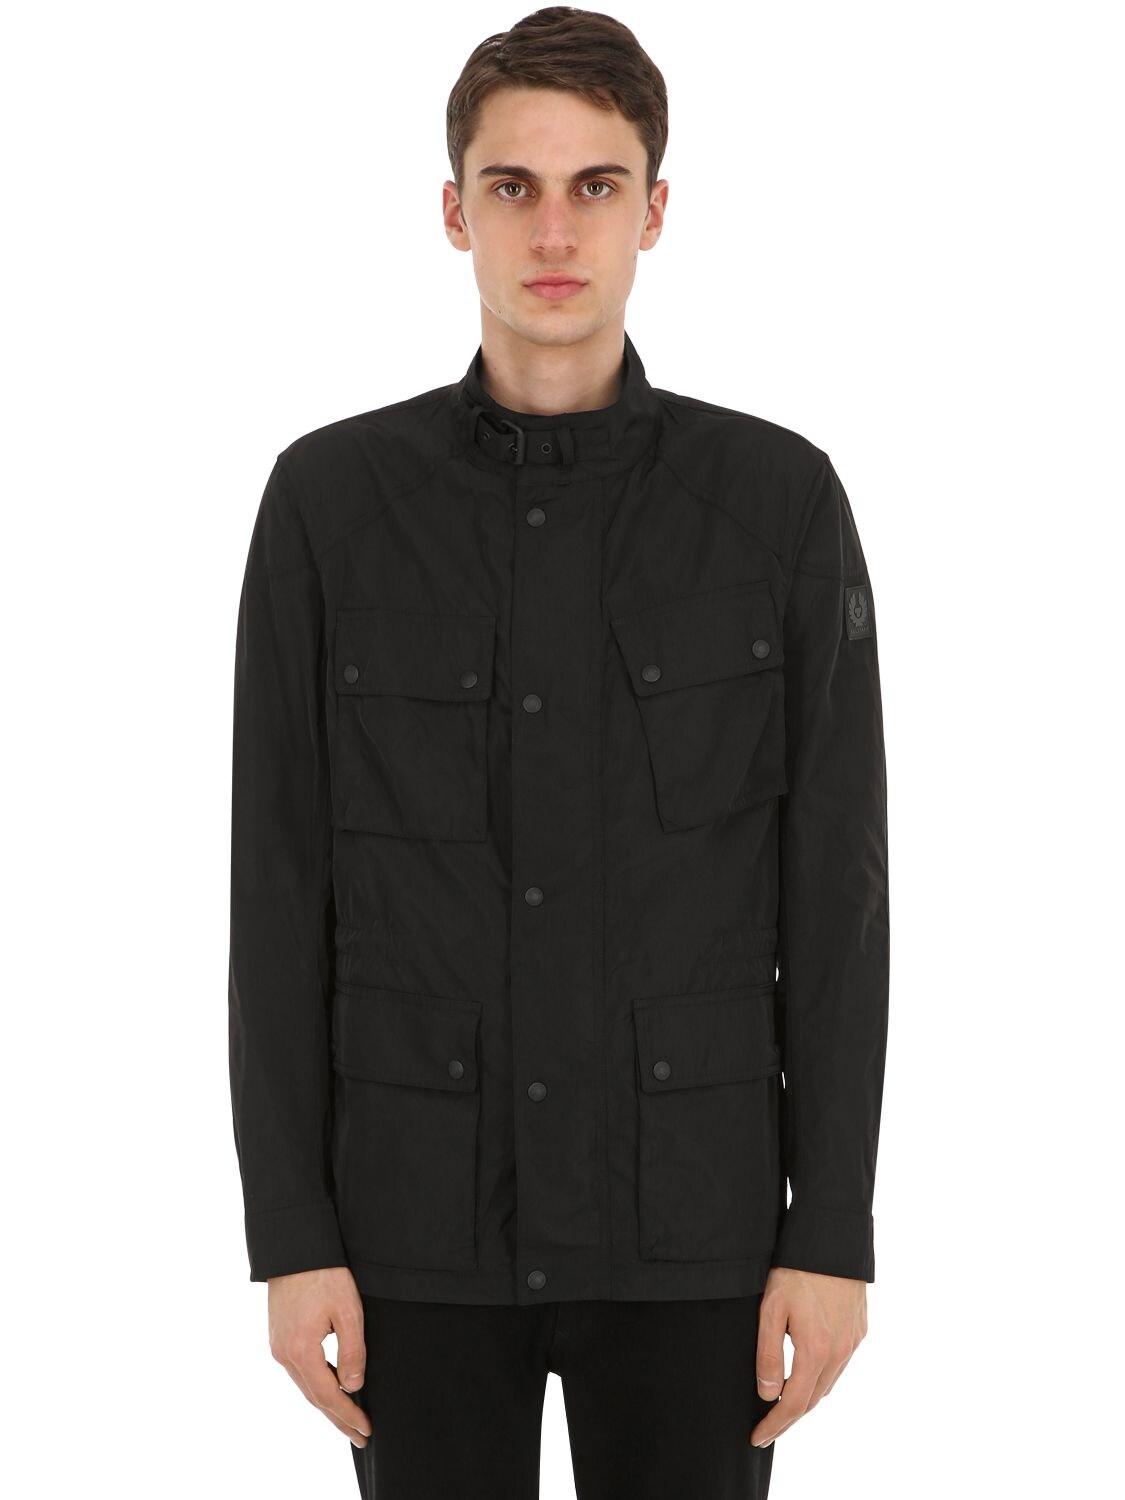 Belstaff Field Master Nylon Jacket in Black for Men - Lyst